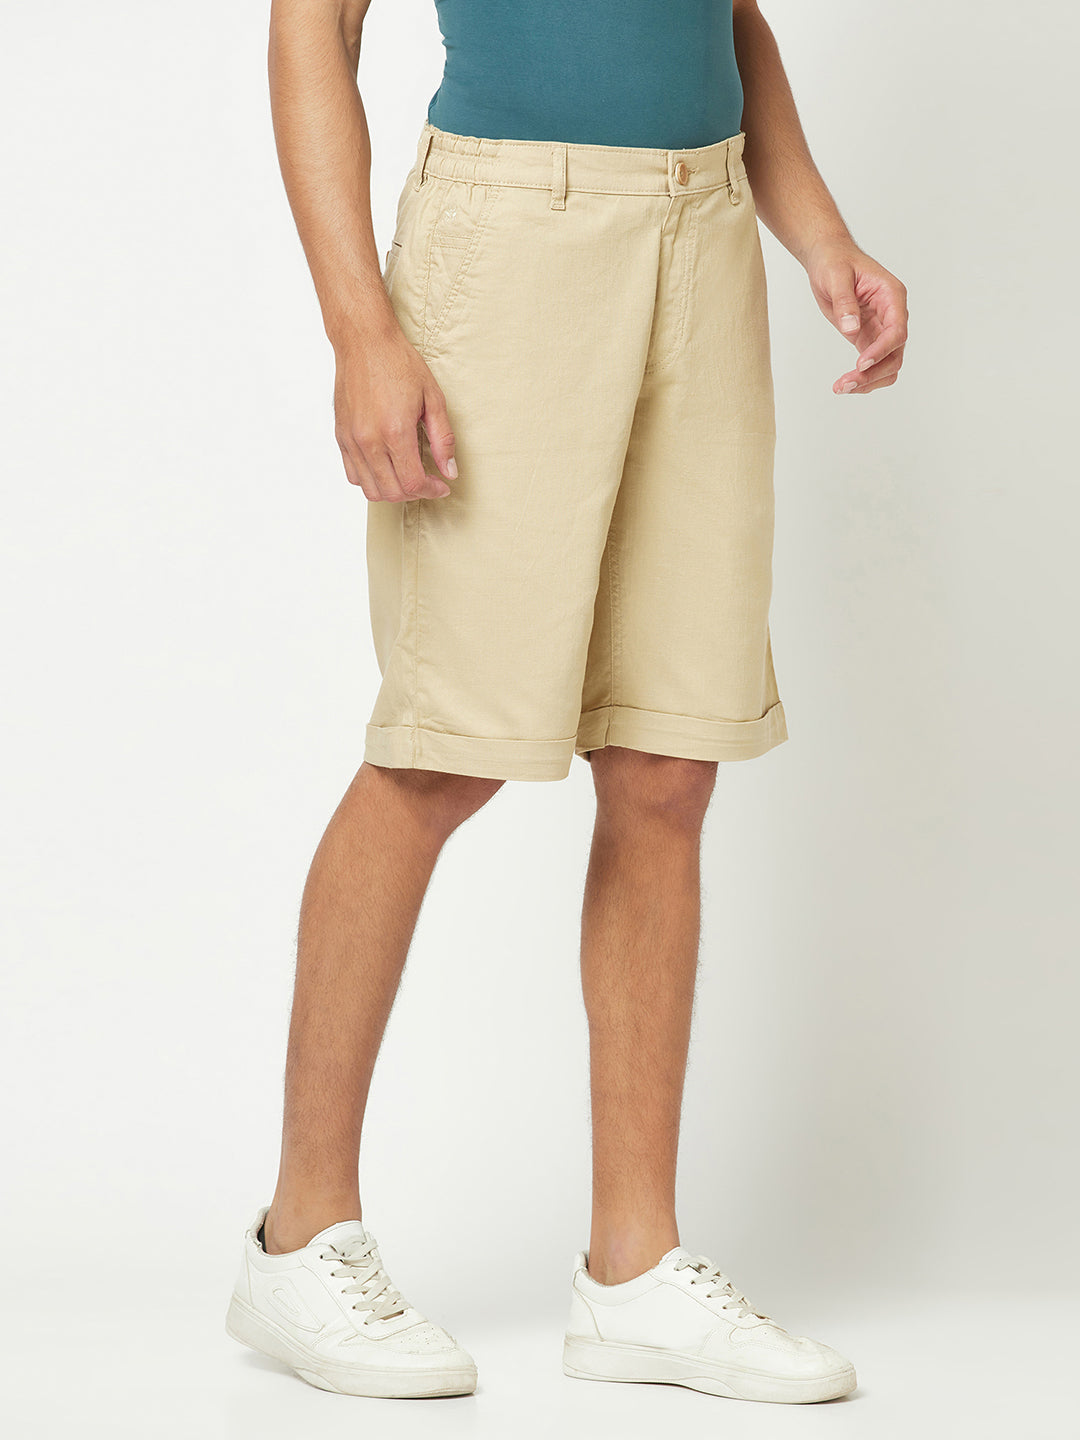  Basic Khaki Chino Shorts